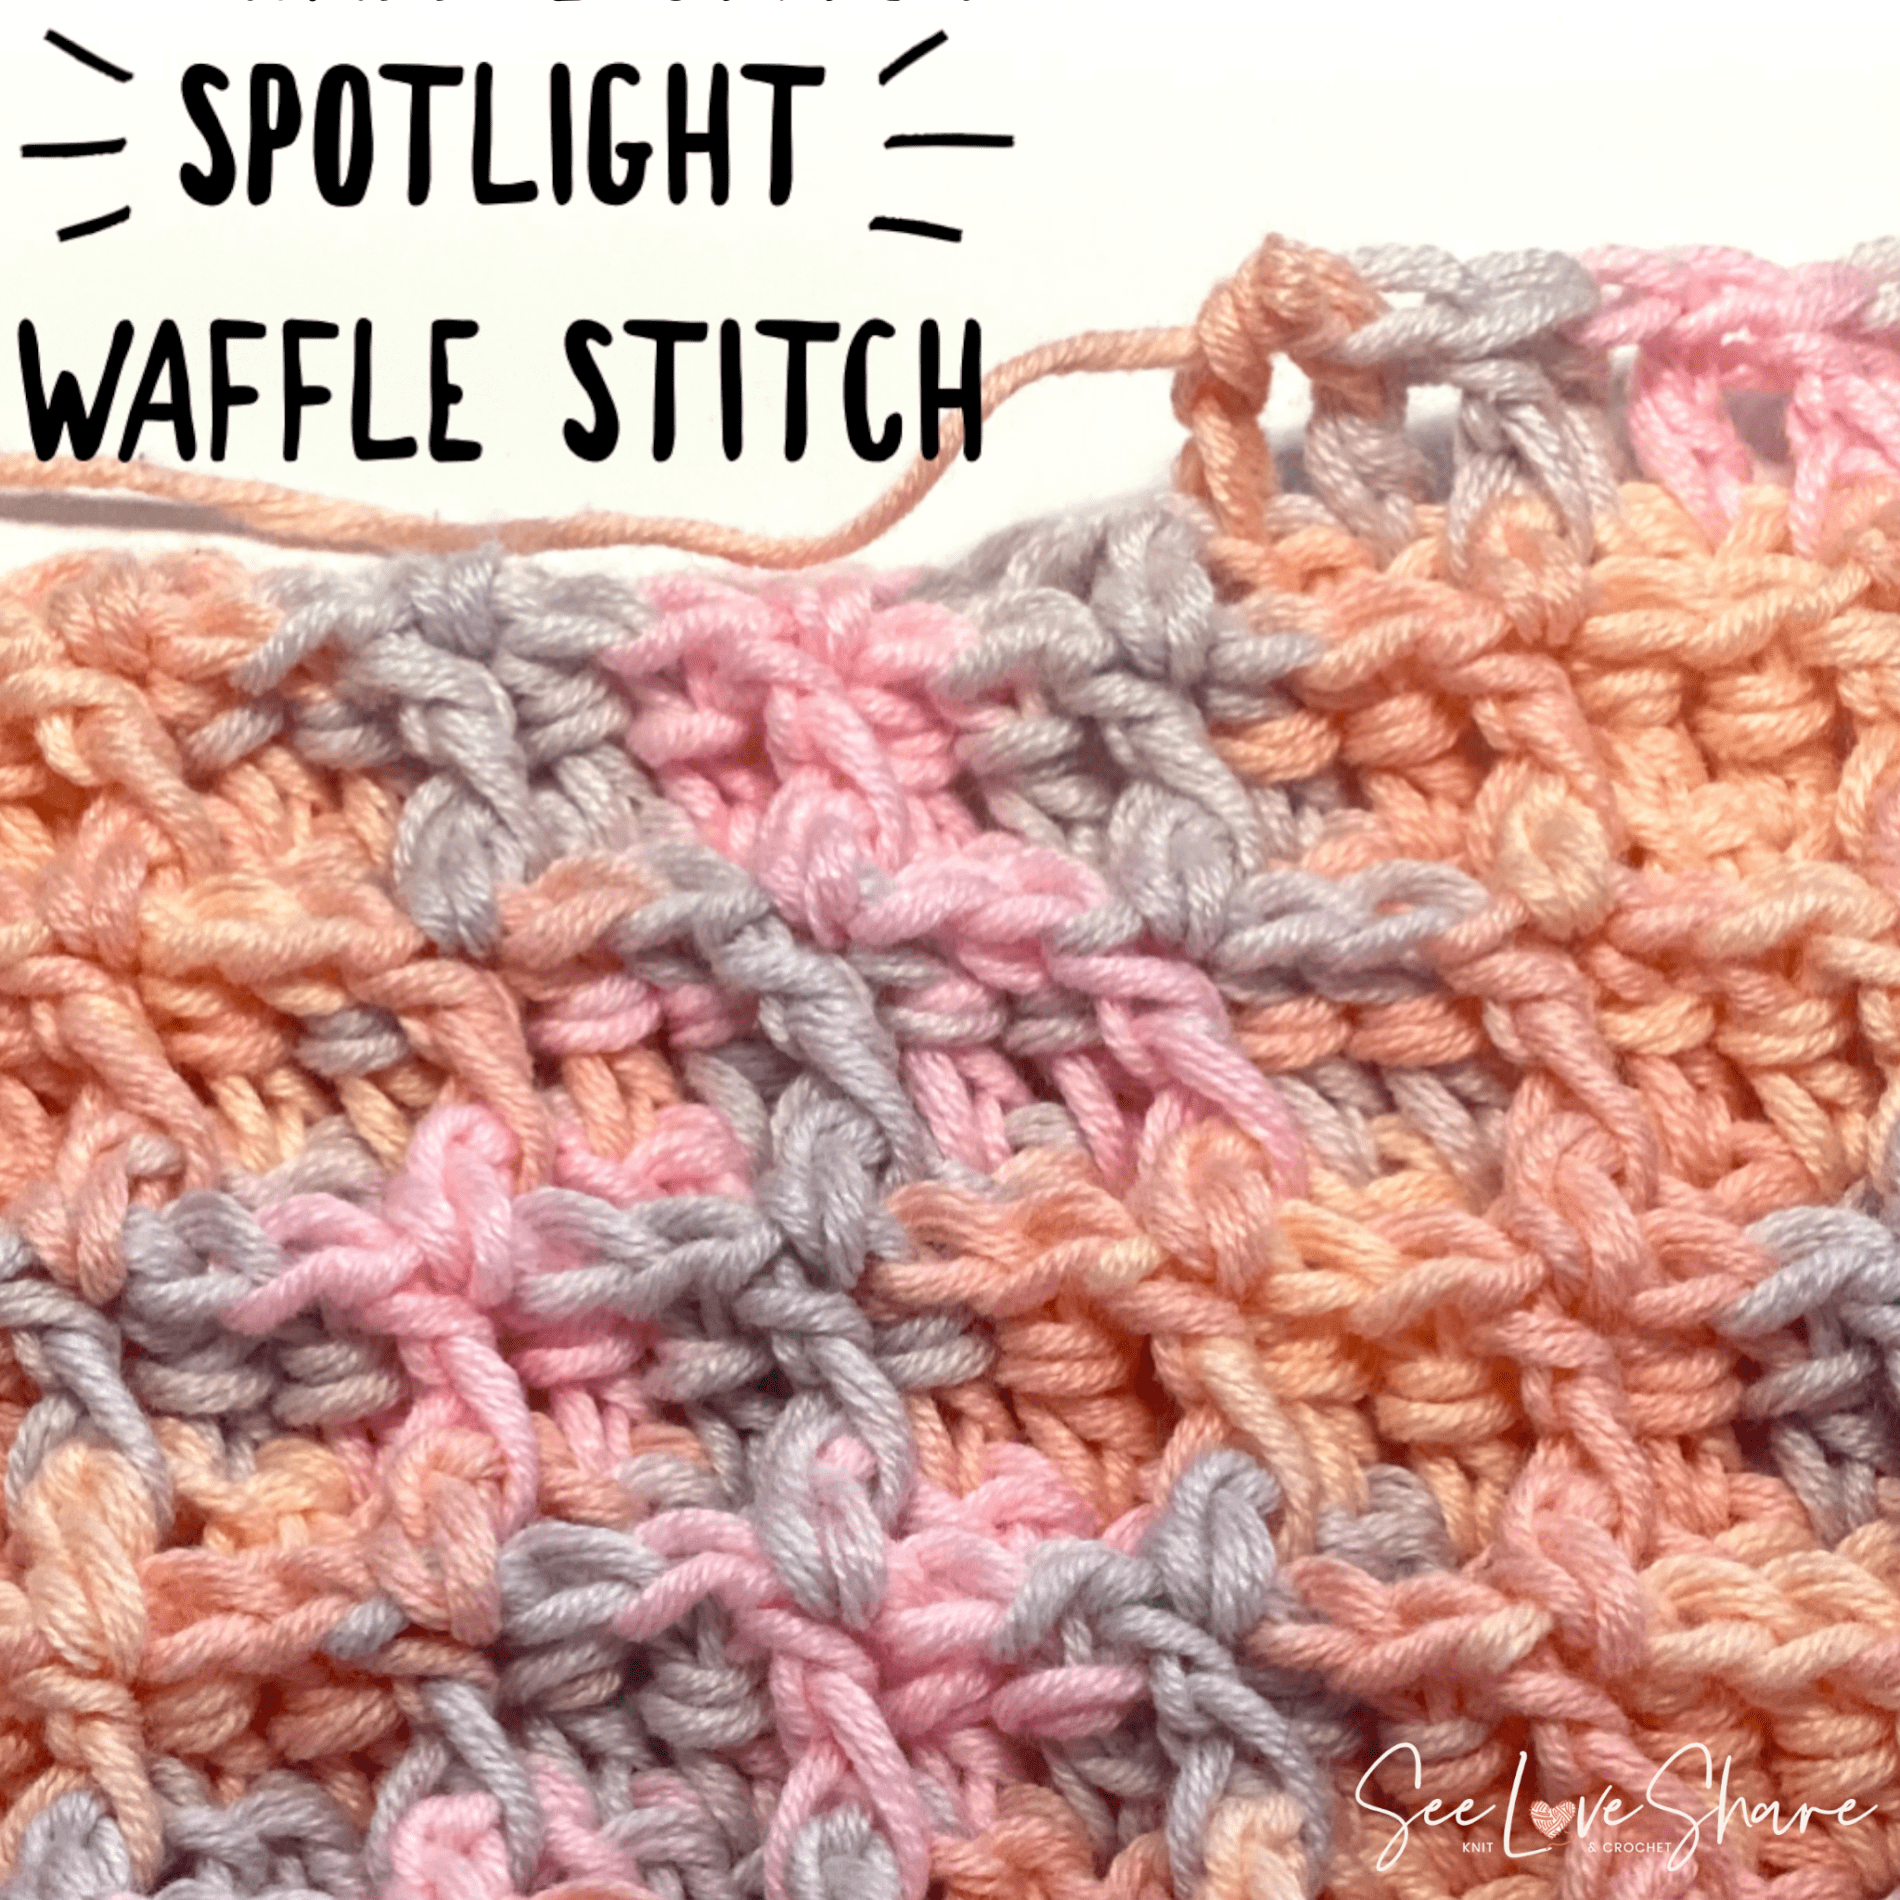 Spotlight Stitch: Waffle Stitch and Video Tutorial (Crochet)